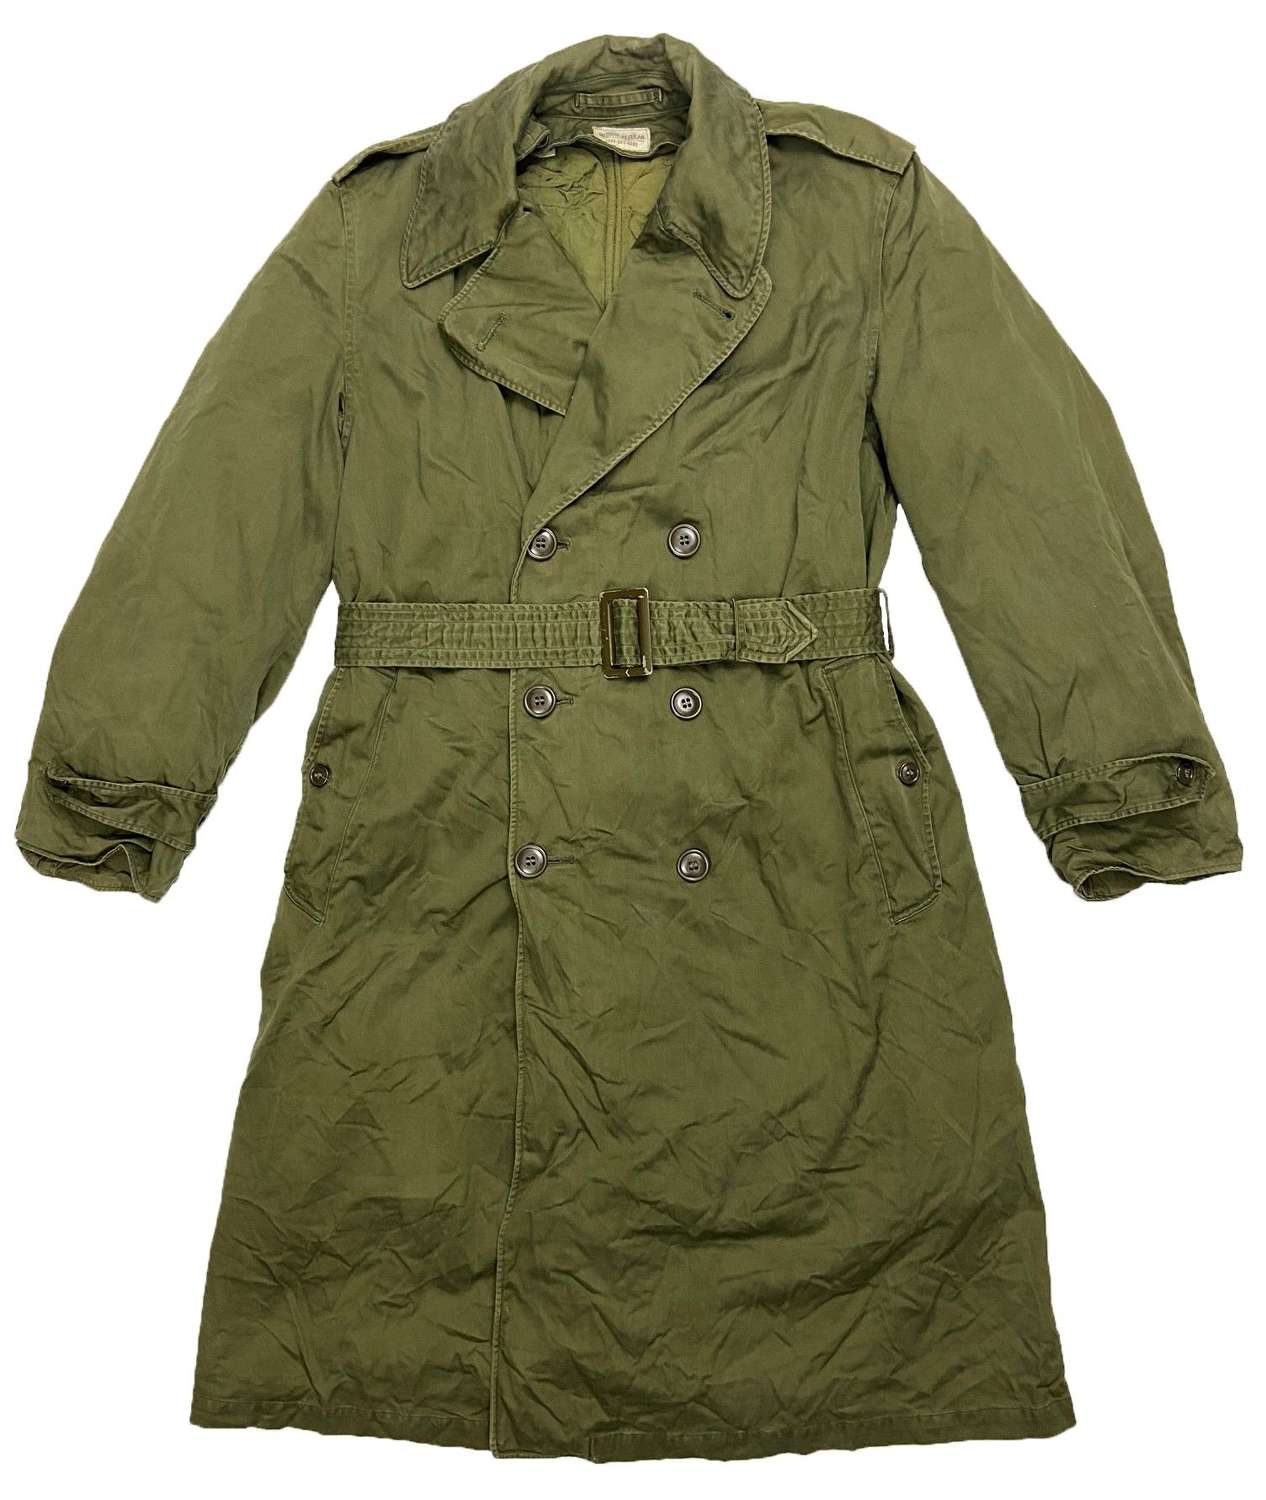 Original 1955 Dated US Army O.G. 107 Raincoat - Size Medium Regular